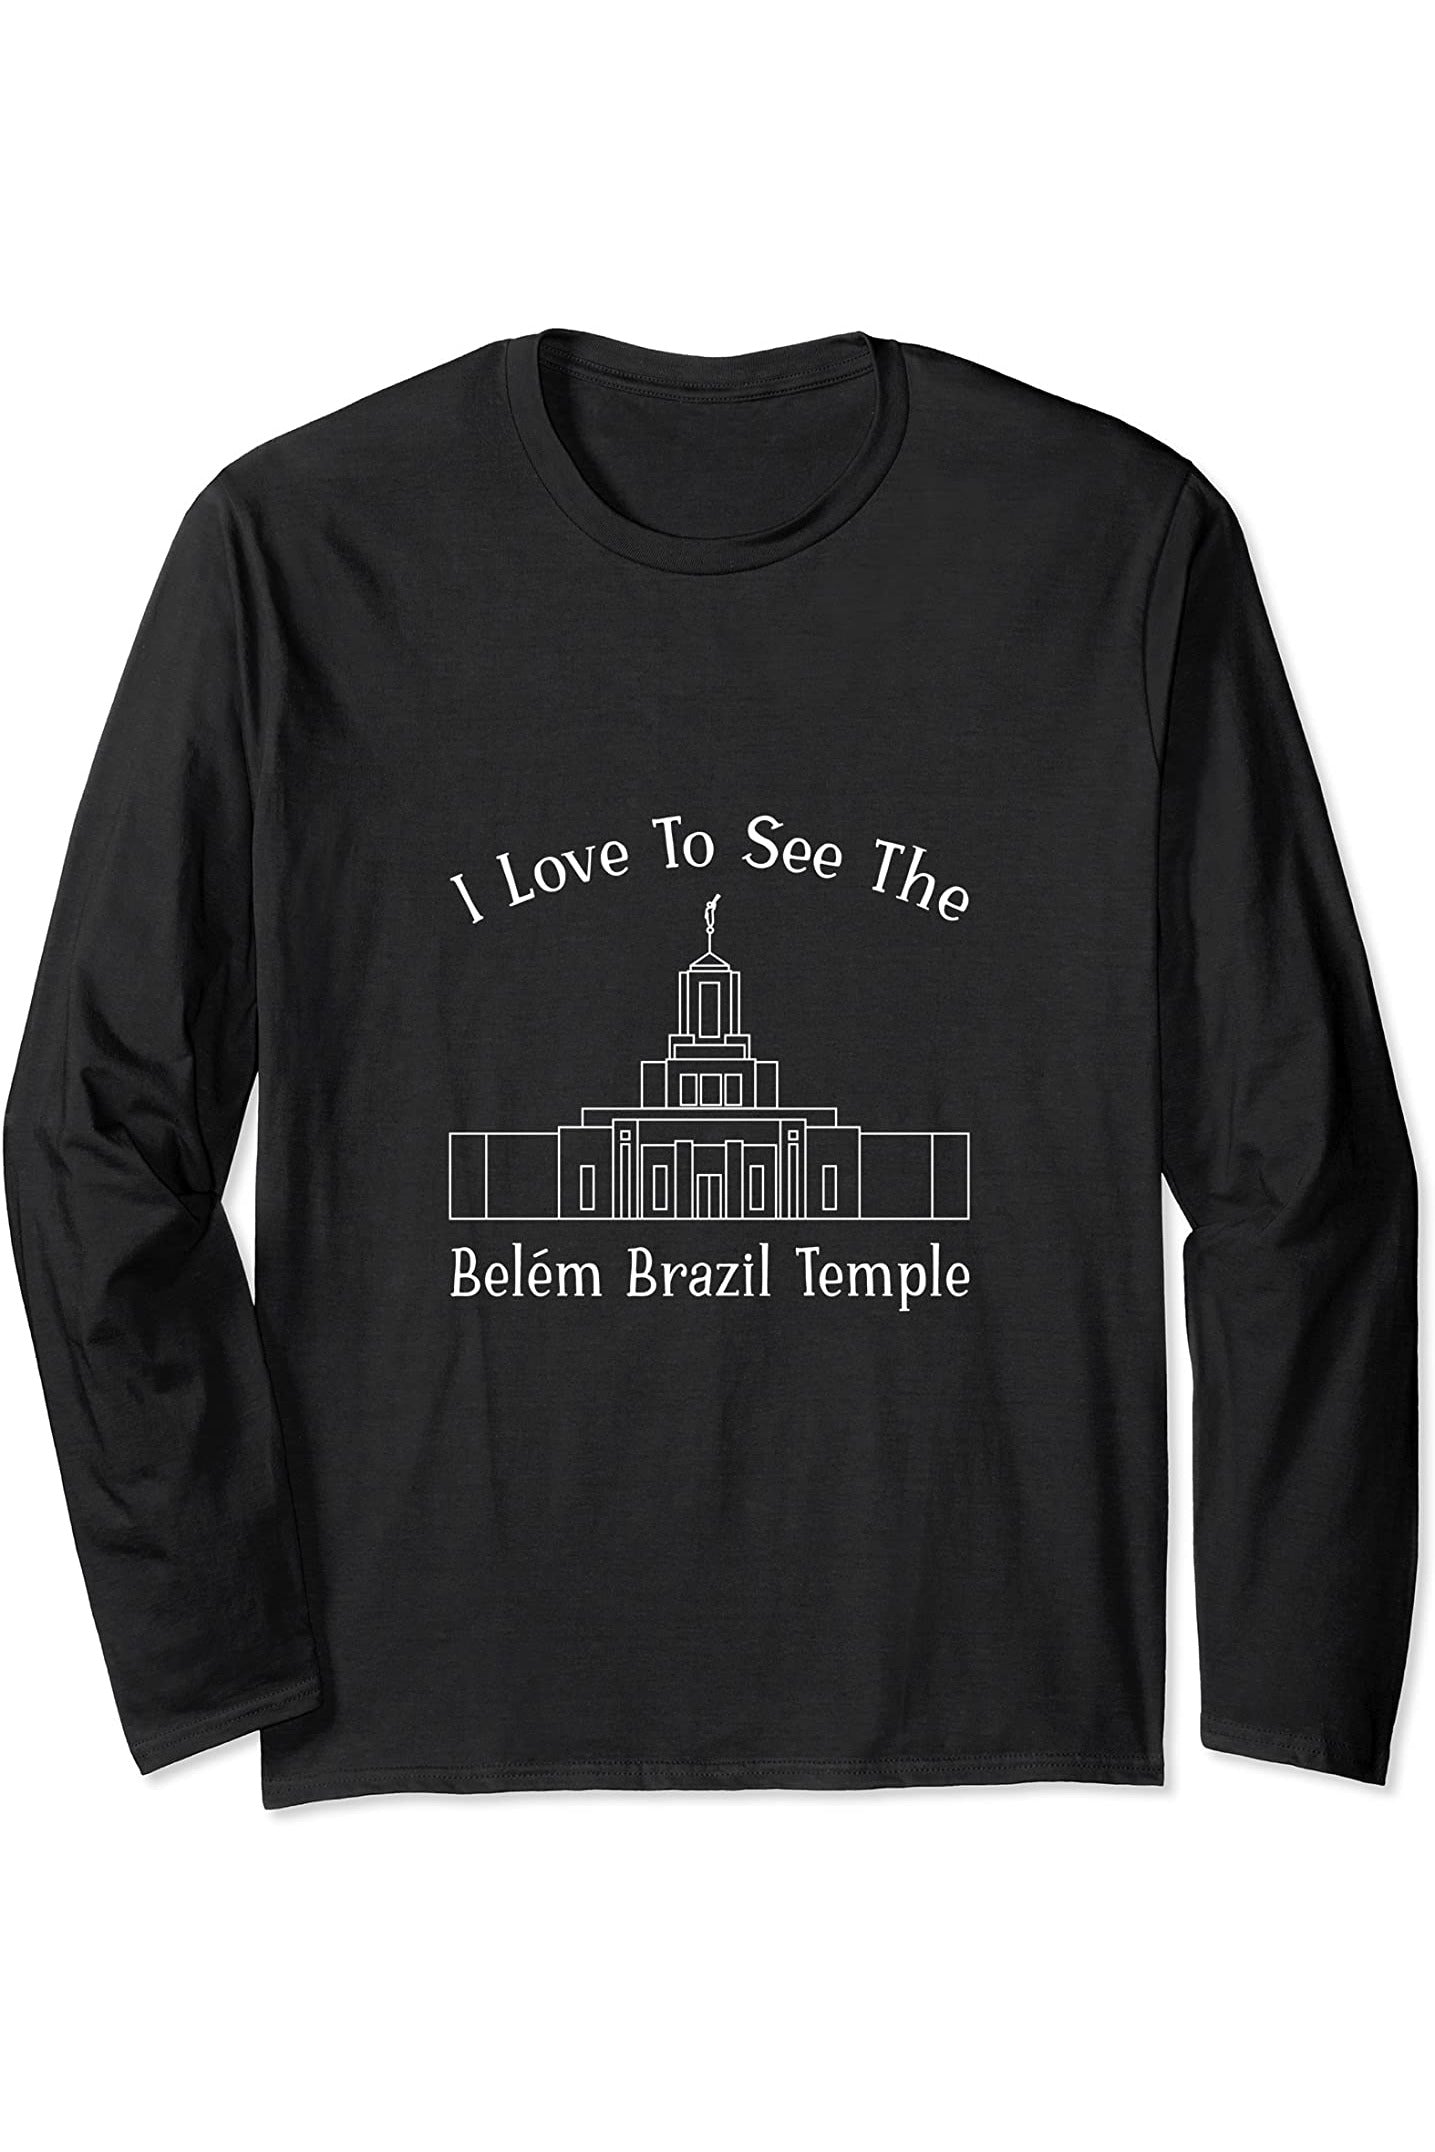 Belem Brazil Temple Long Sleeve T-Shirt - Happy Style (English) US